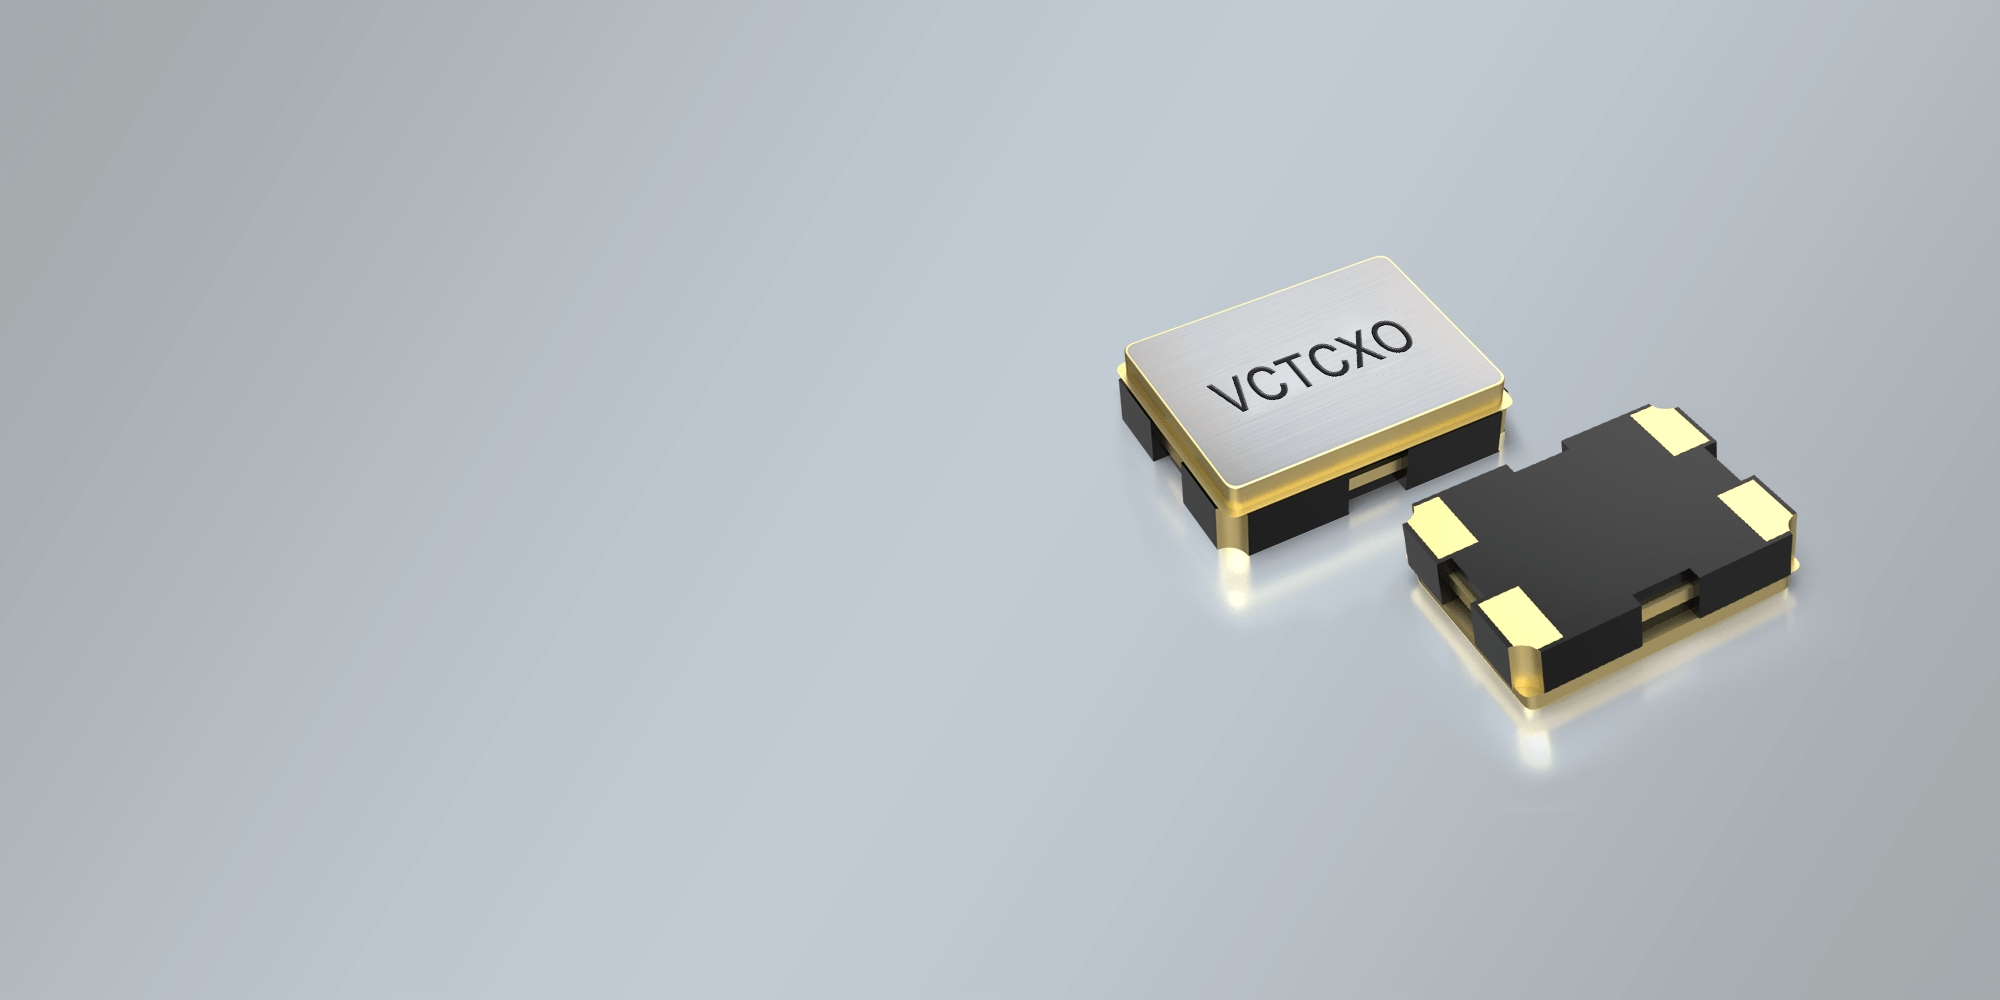 SMD VCTCXO OSCILLATOR 2.0 x 1.6 mm